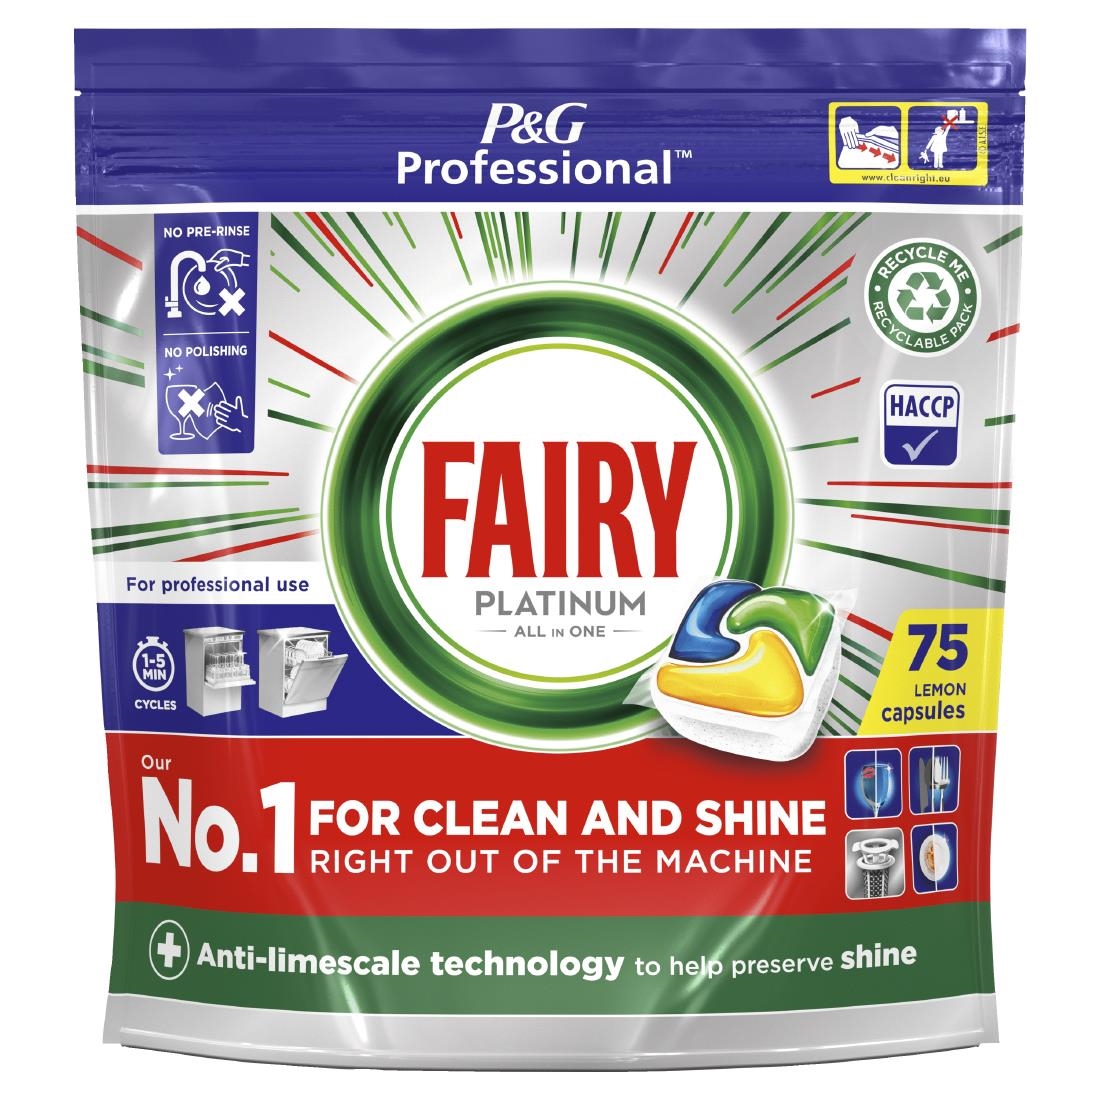 Fairy Professional Platinum Dishwasher Tablets Lemon Pack of 3 x 75 (DX544)